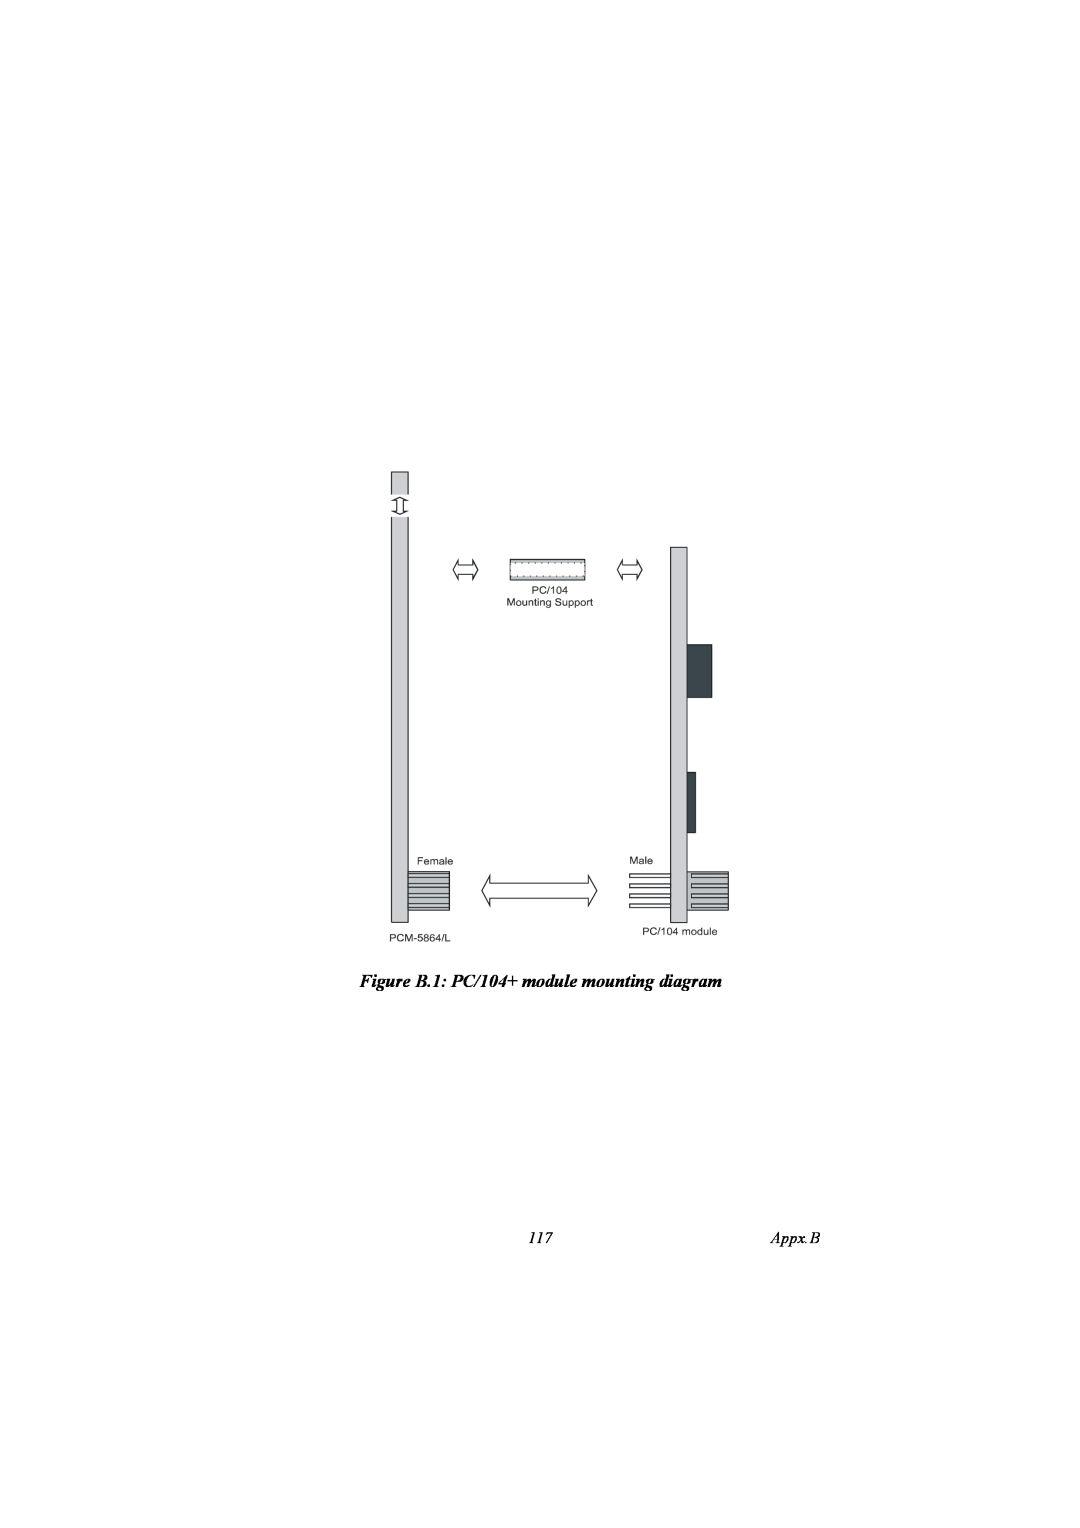 IBM 100/10, PCM-9575 user manual Figure B.1 PC/104+ module mounting diagram, Appx.B 